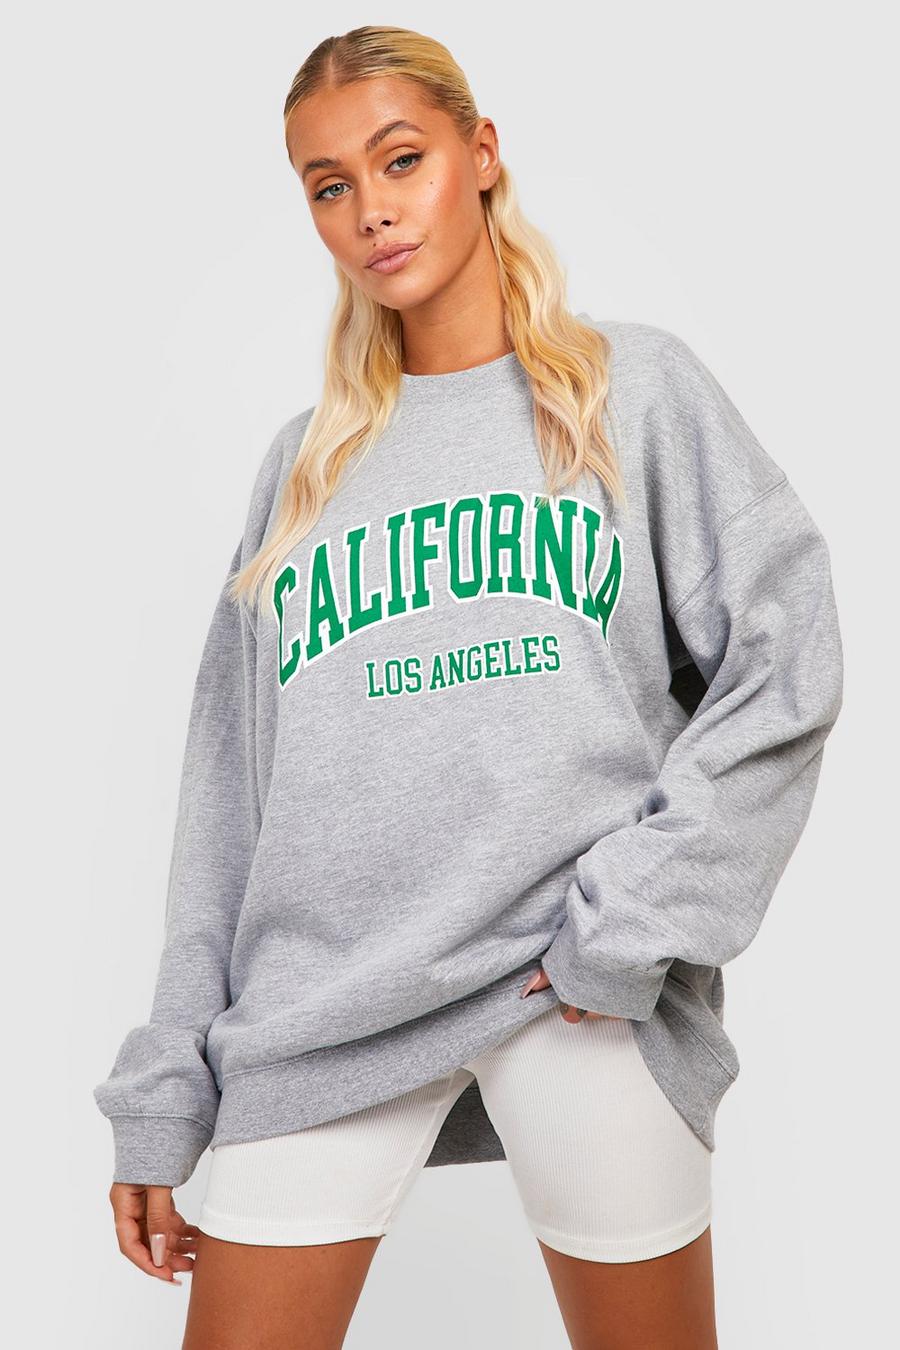 https://media.boohoo.com/i/boohoo/gzz28624_grey%20marl_xl/female-grey%20marl-california-slogan-oversized-sweater/?w=900&qlt=default&fmt.jp2.qlt=70&fmt=auto&sm=fit